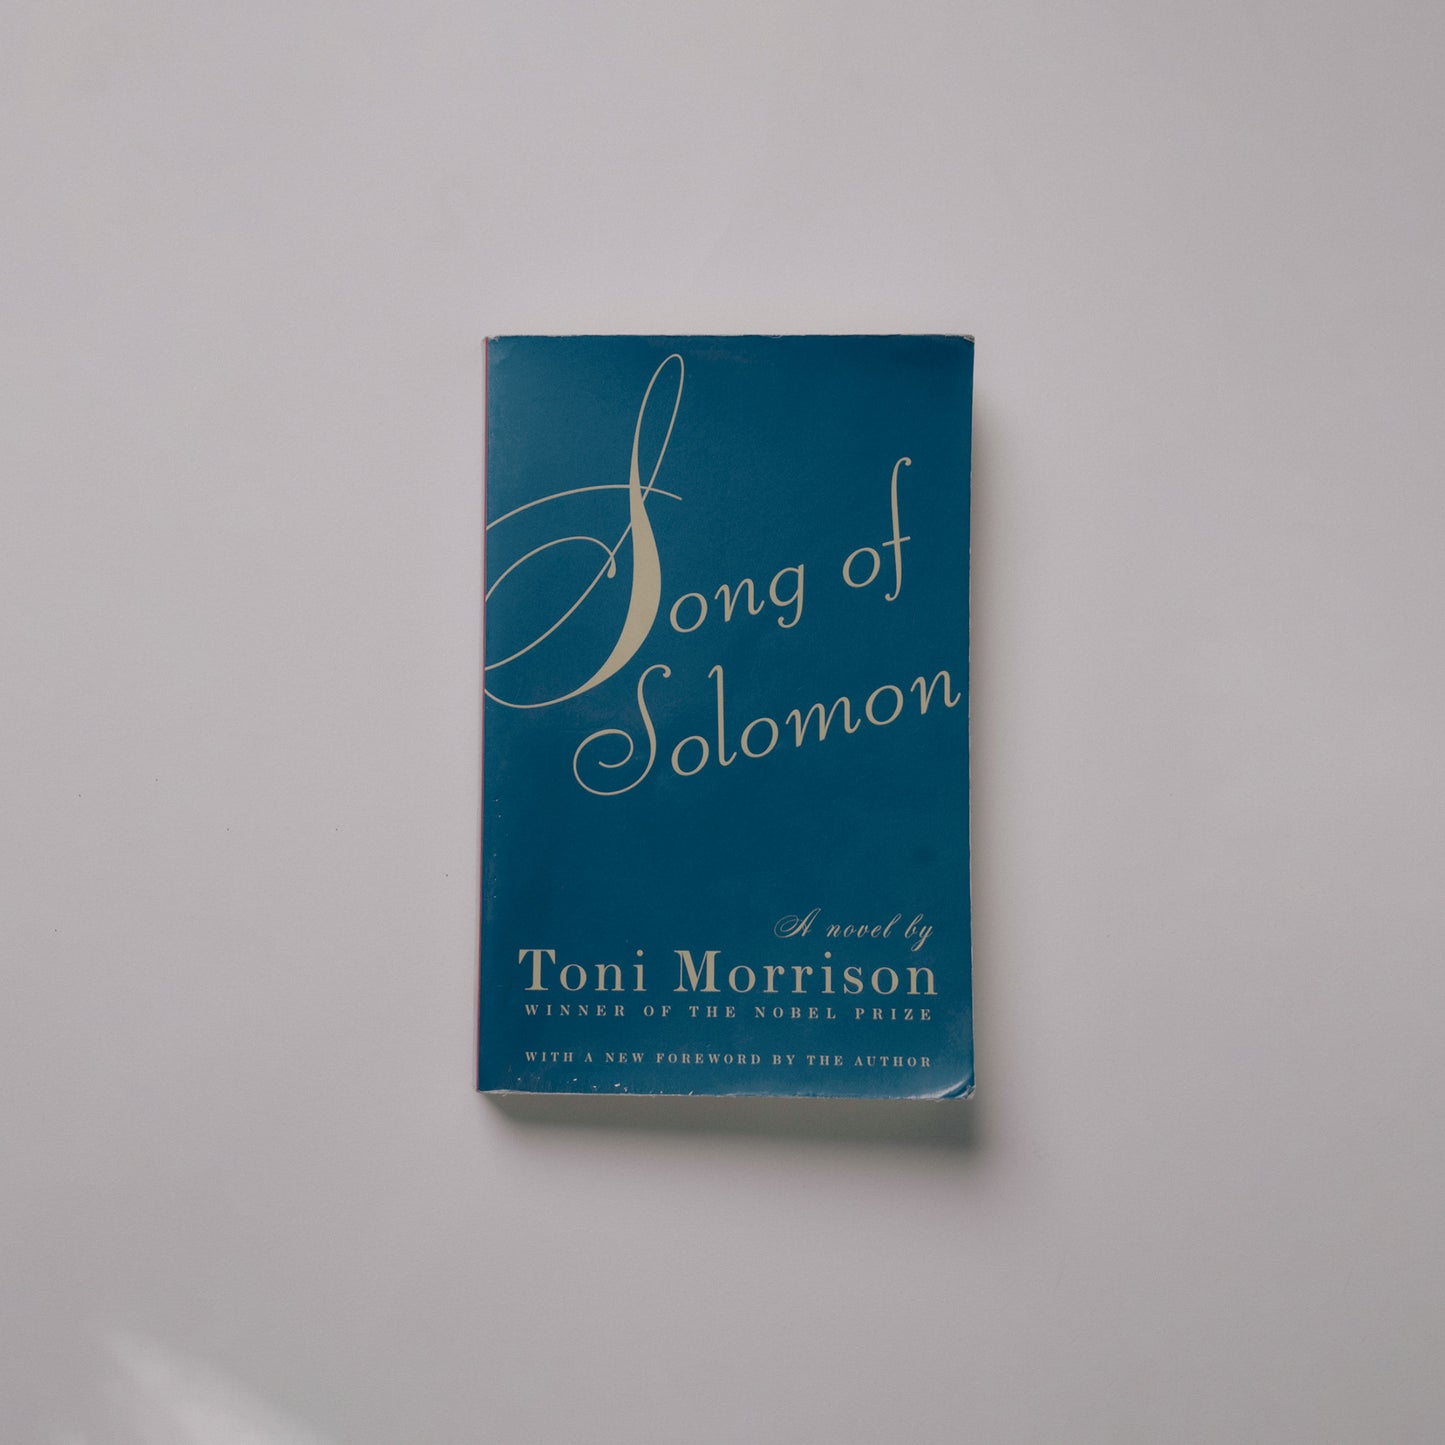 Song of Solomon (Fiction)